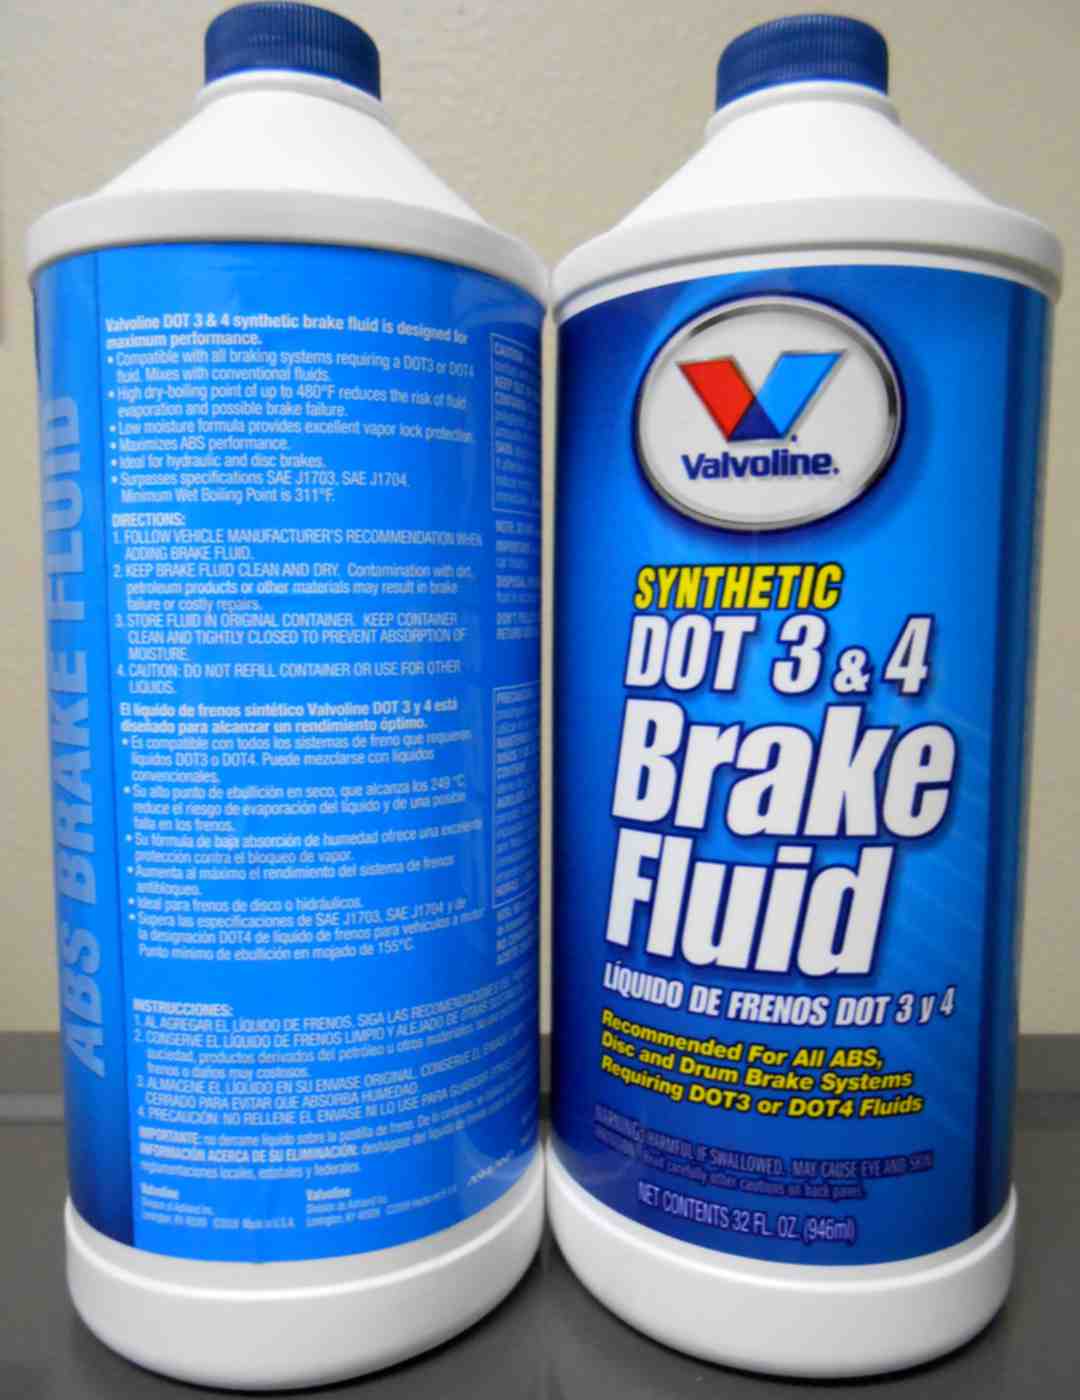 Valvoline's Synthetic Brake Fluid